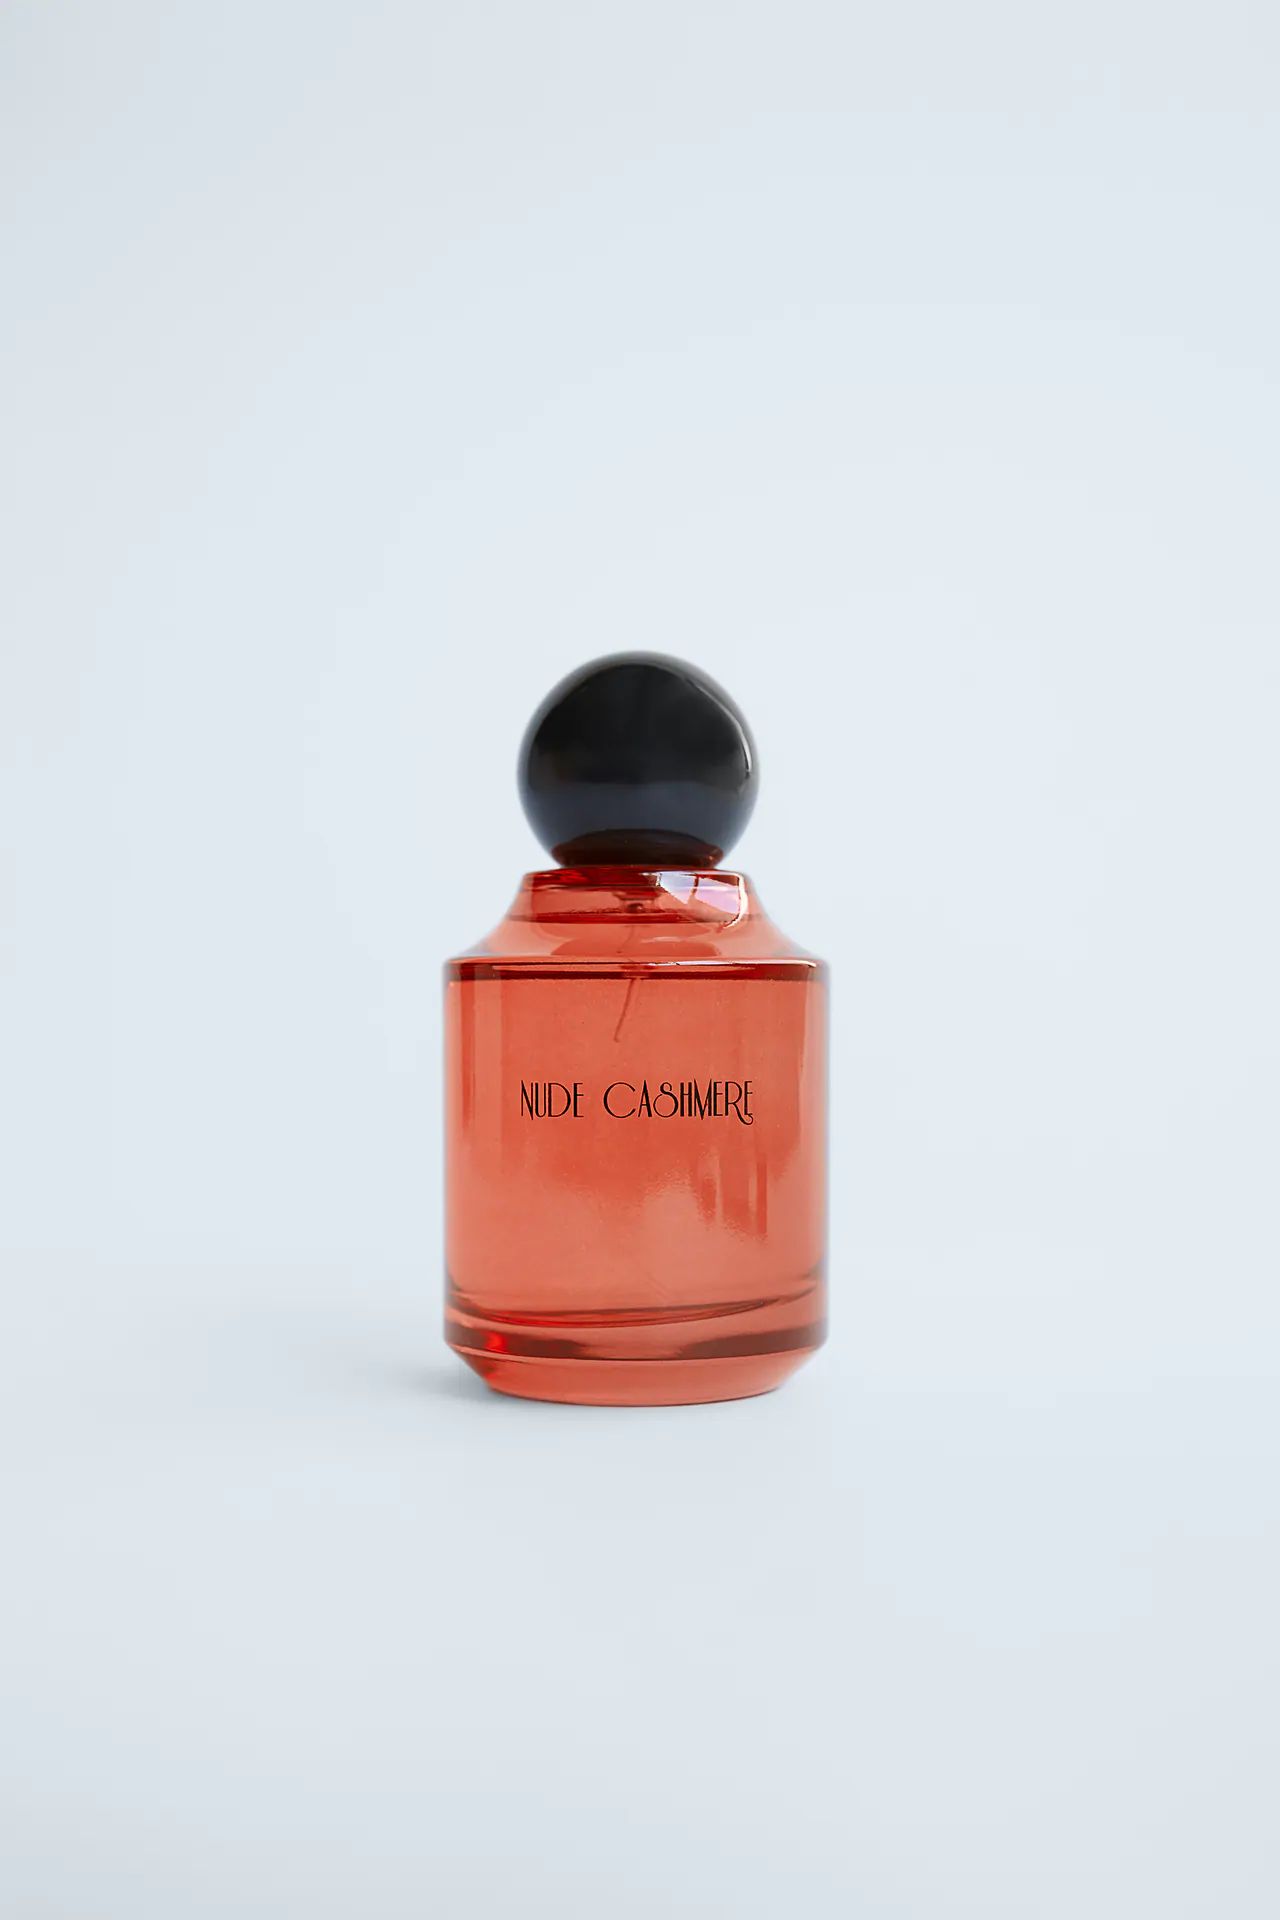 Nude Cashmere Zara perfume - a fragrance for women 2020